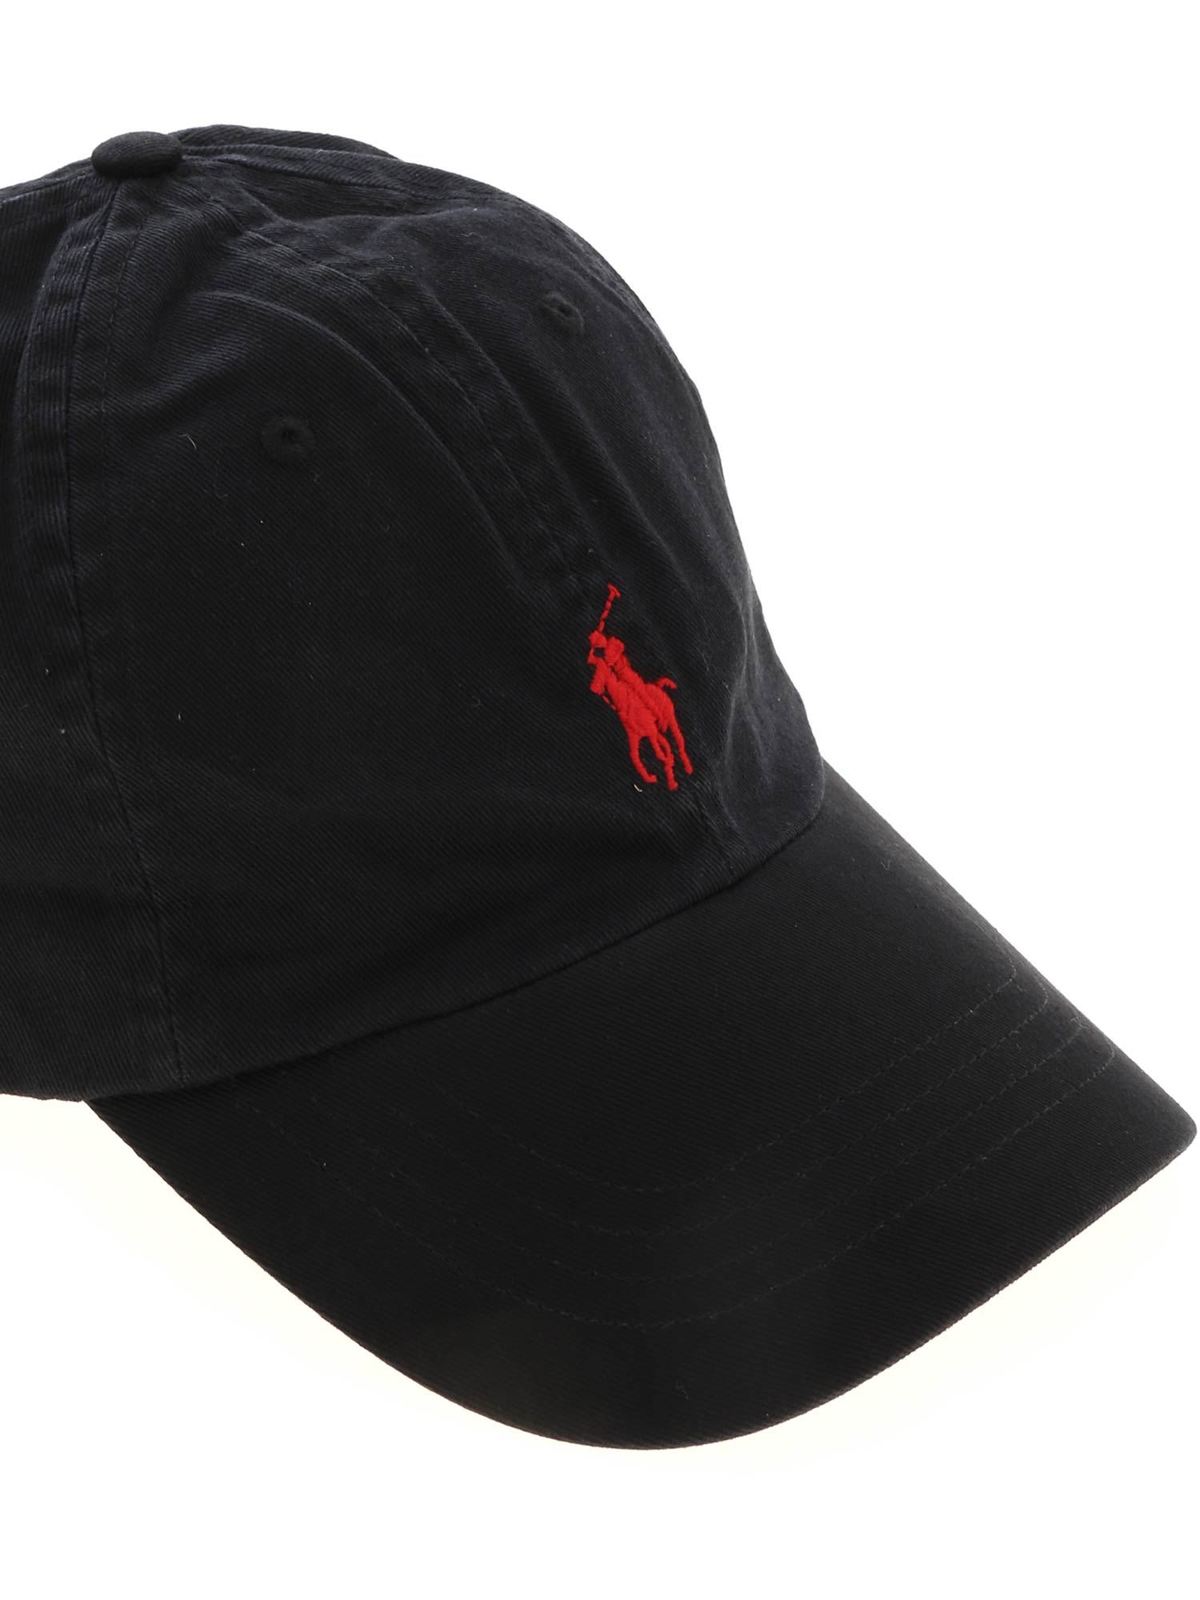 Hats & caps Polo Ralph Lauren - Logo baseball cap in black - 710548524004